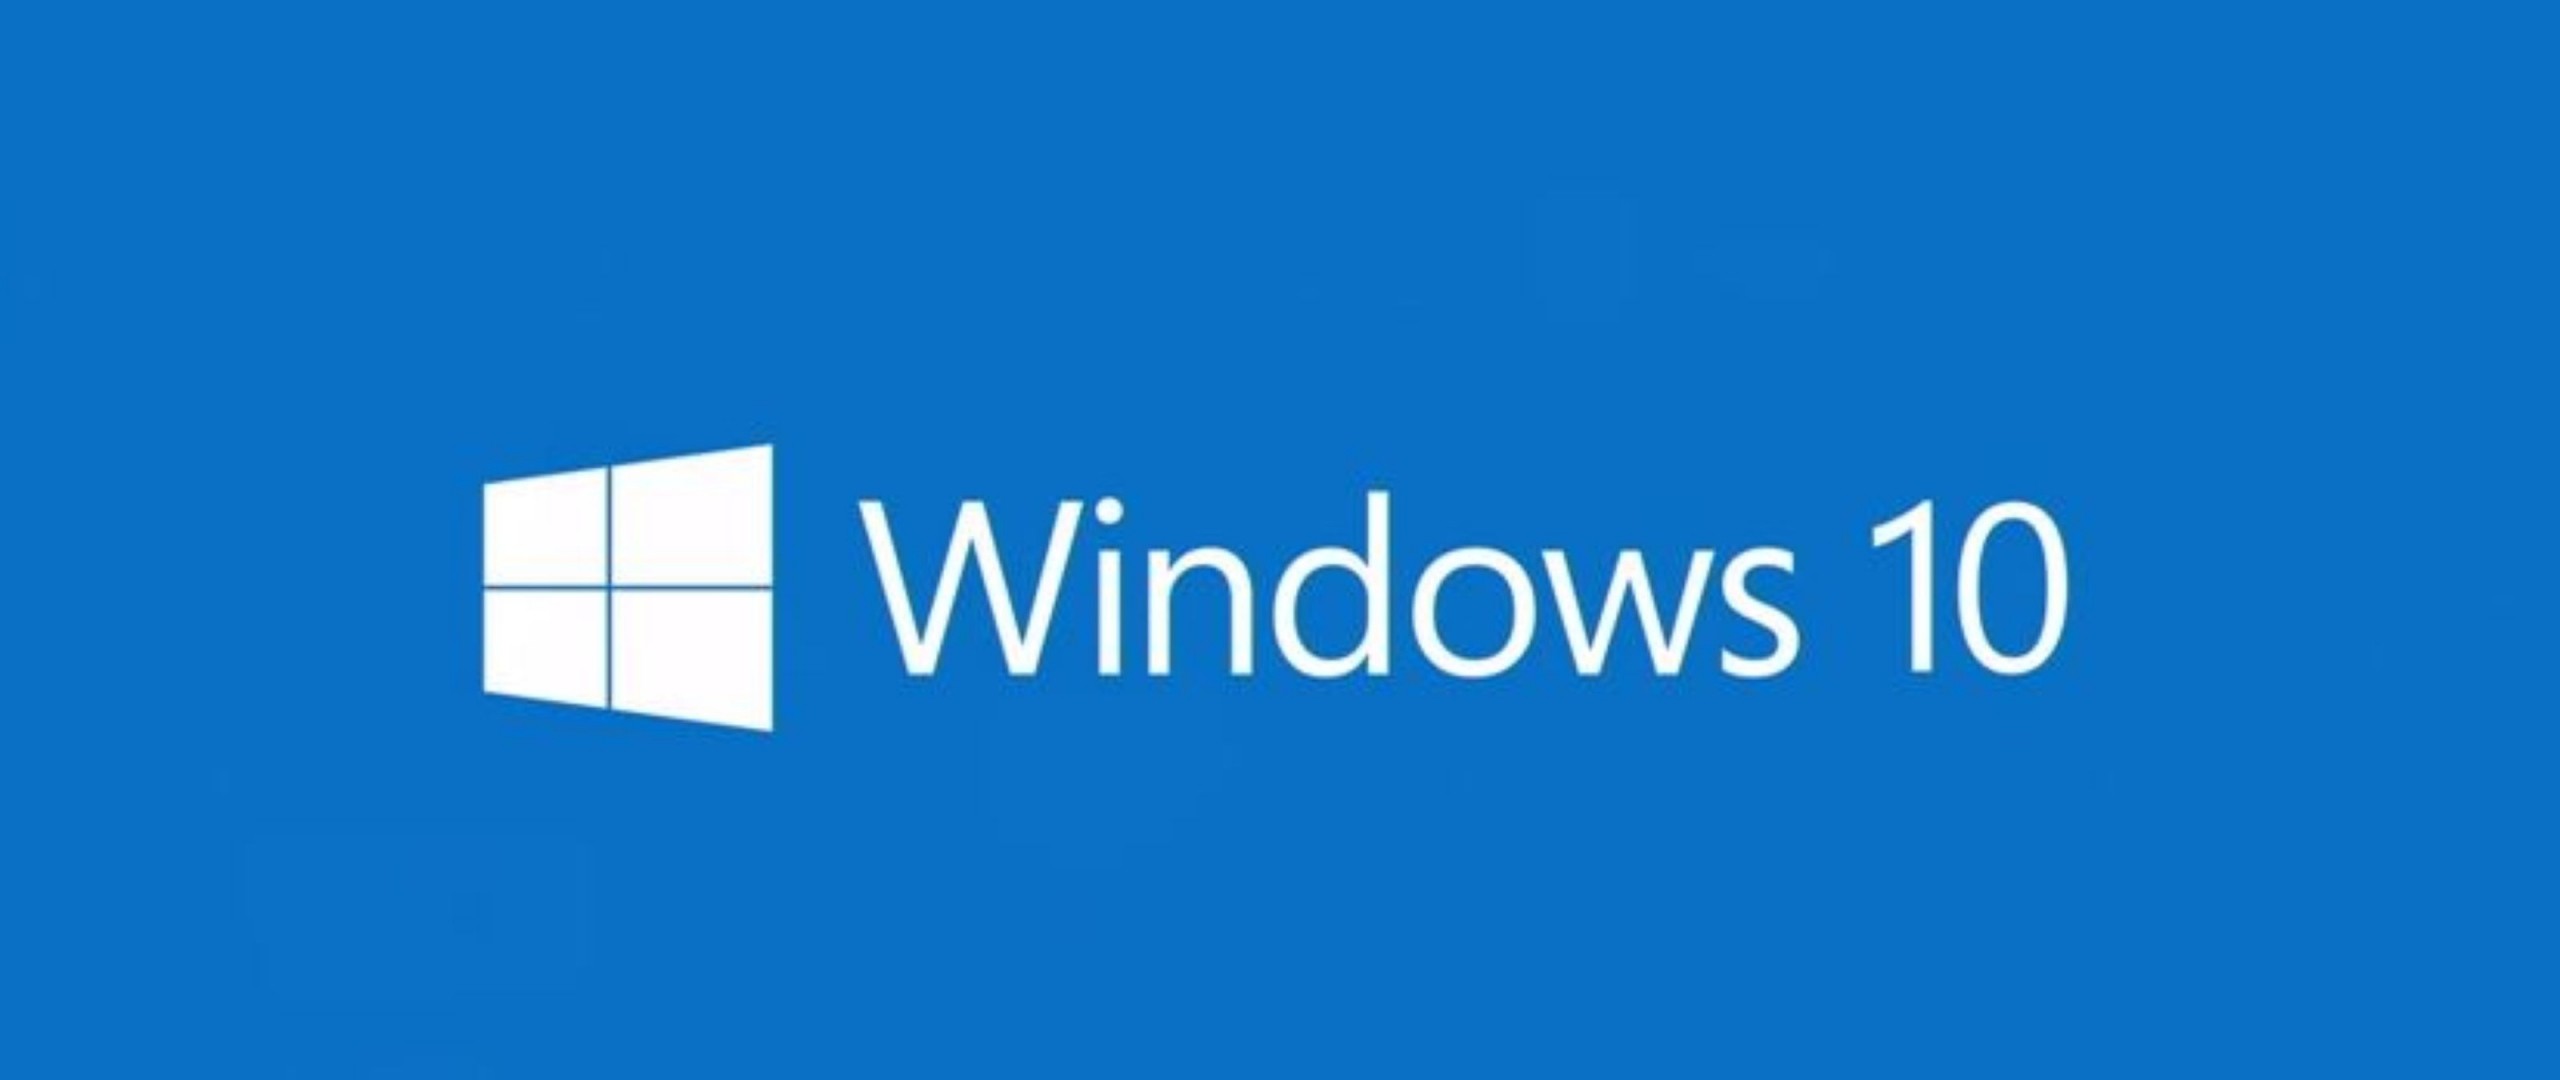 2560x1080  Wallpaper windows 10 technical preview, windows 10 logo, microsoft